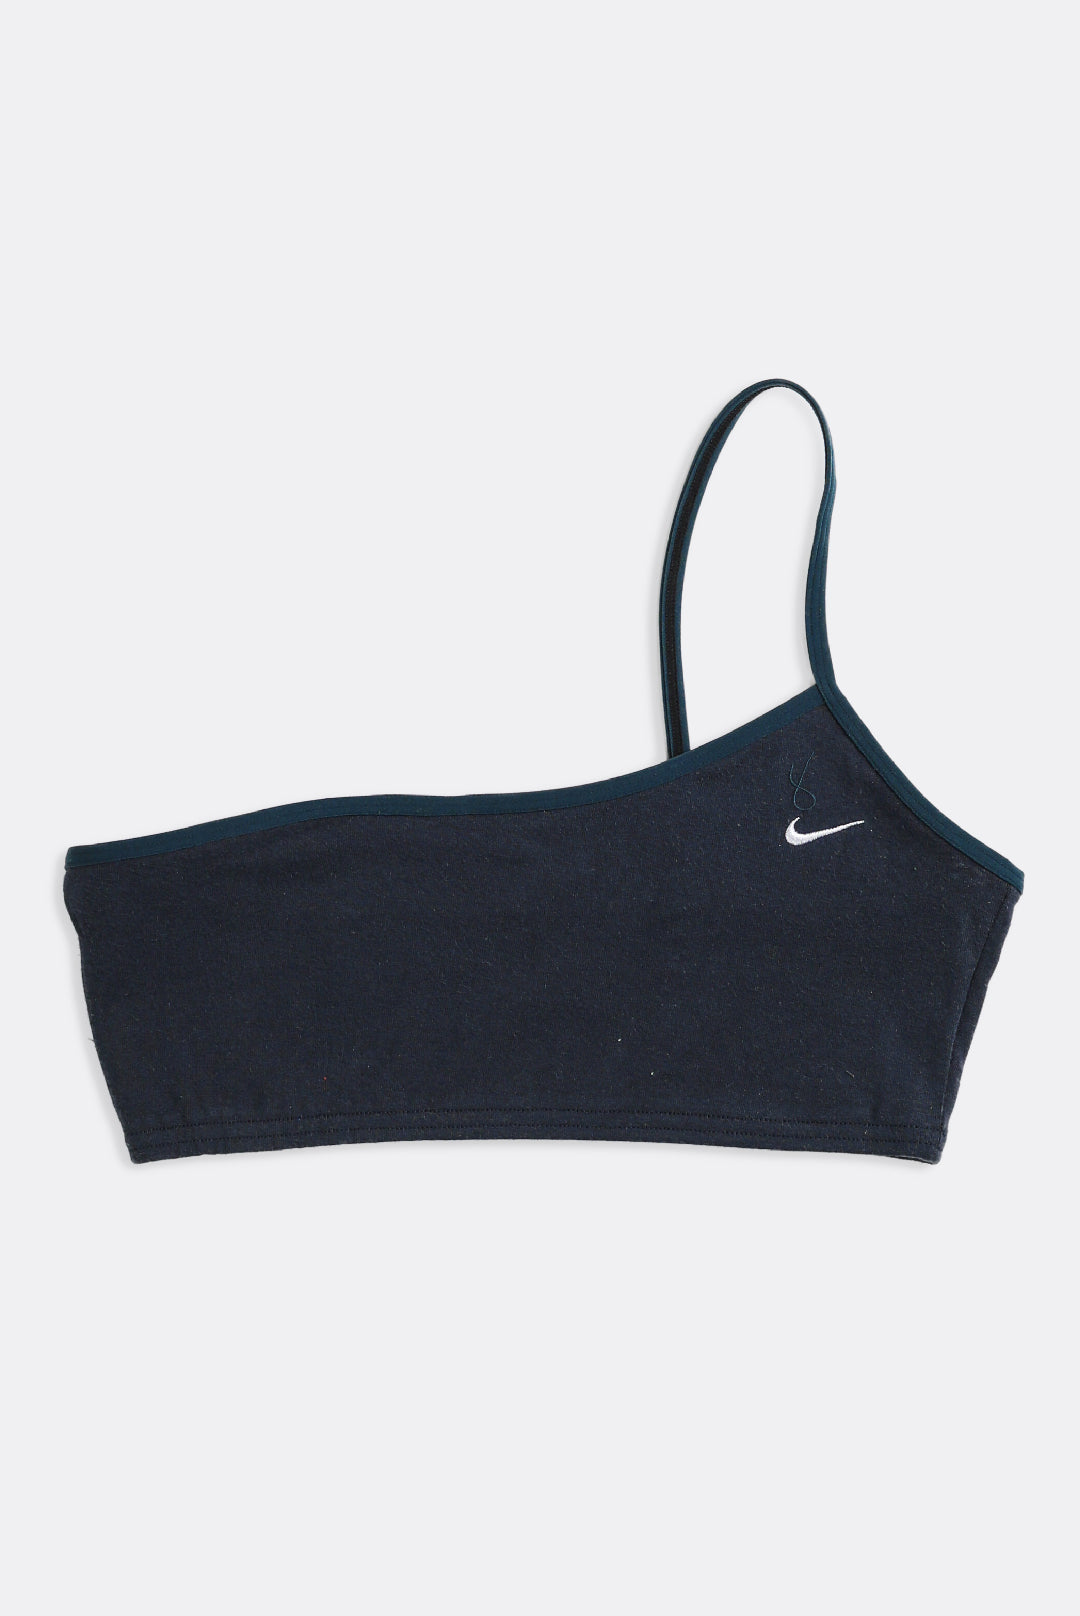 Rework Nike One Shoulder Bra Top - XS, S, M, L, XL – Frankie Collective